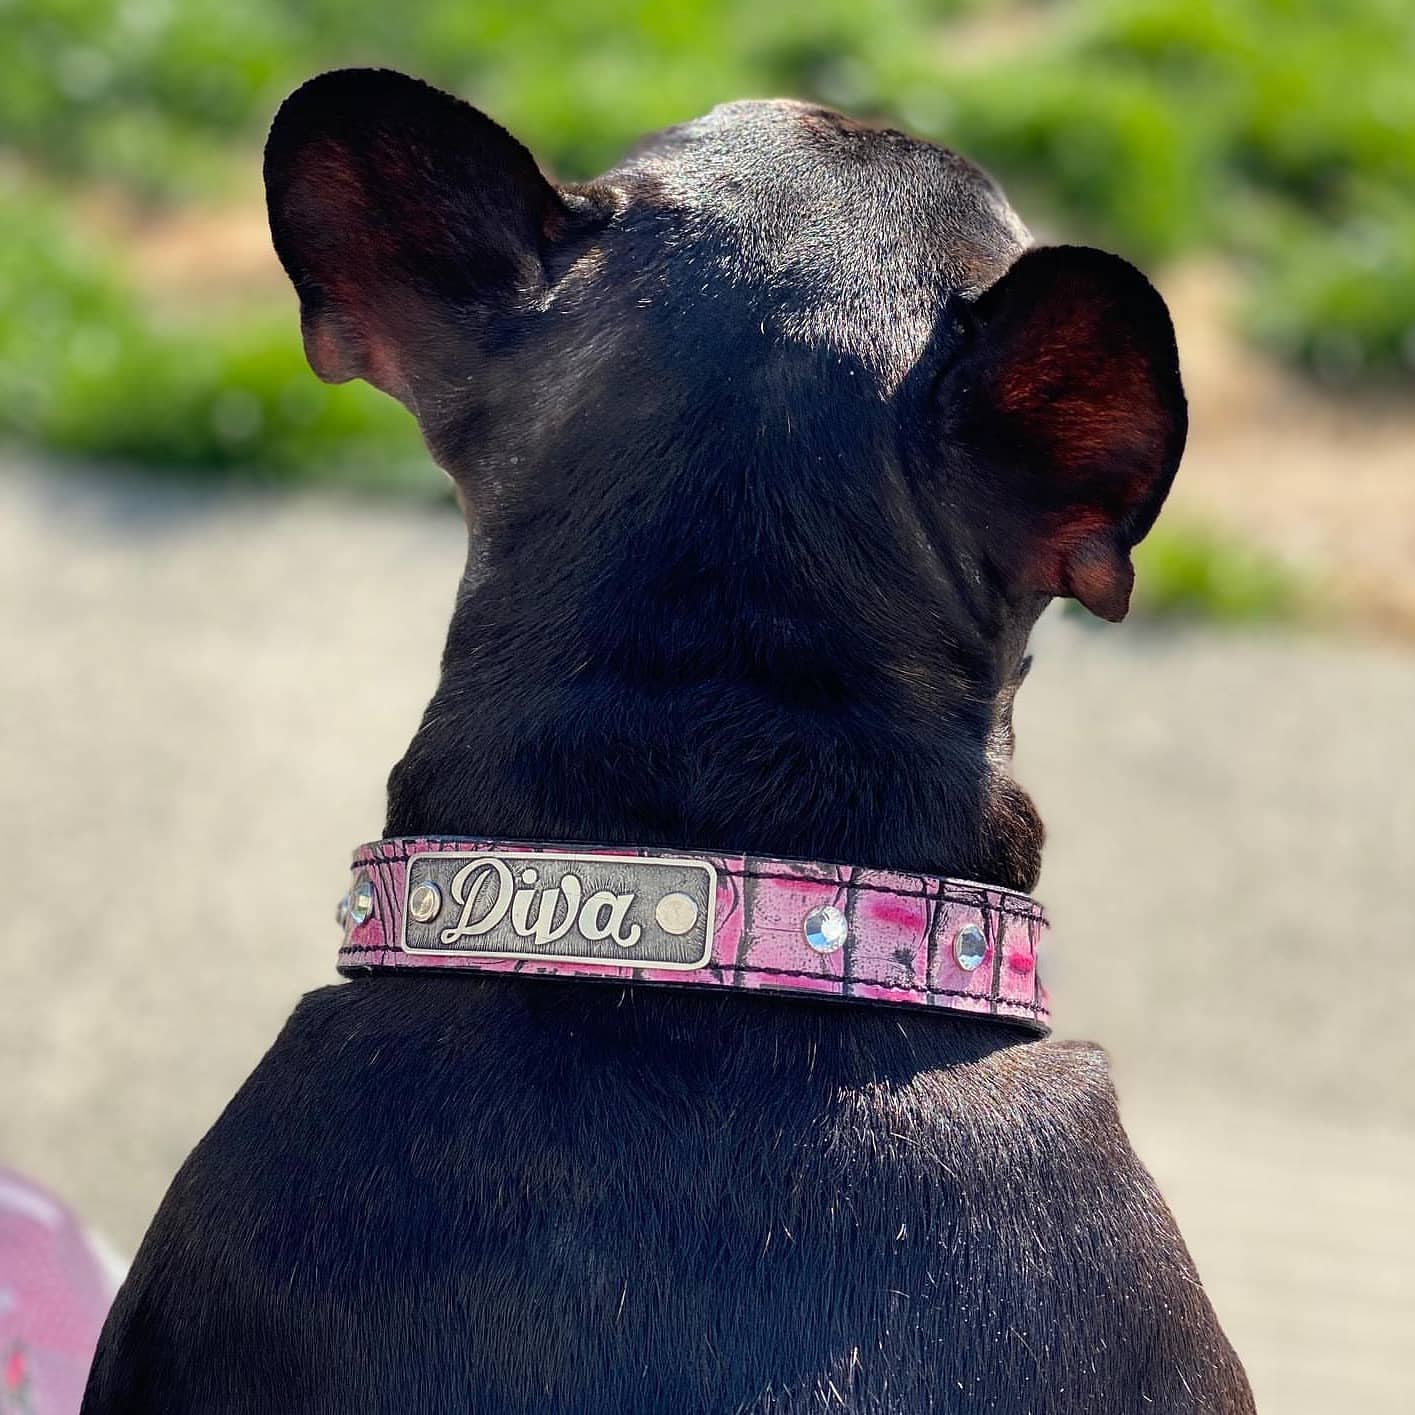 BRAND NEW Prada dog collar!!! for Sale in Middleburg, FL - OfferUp